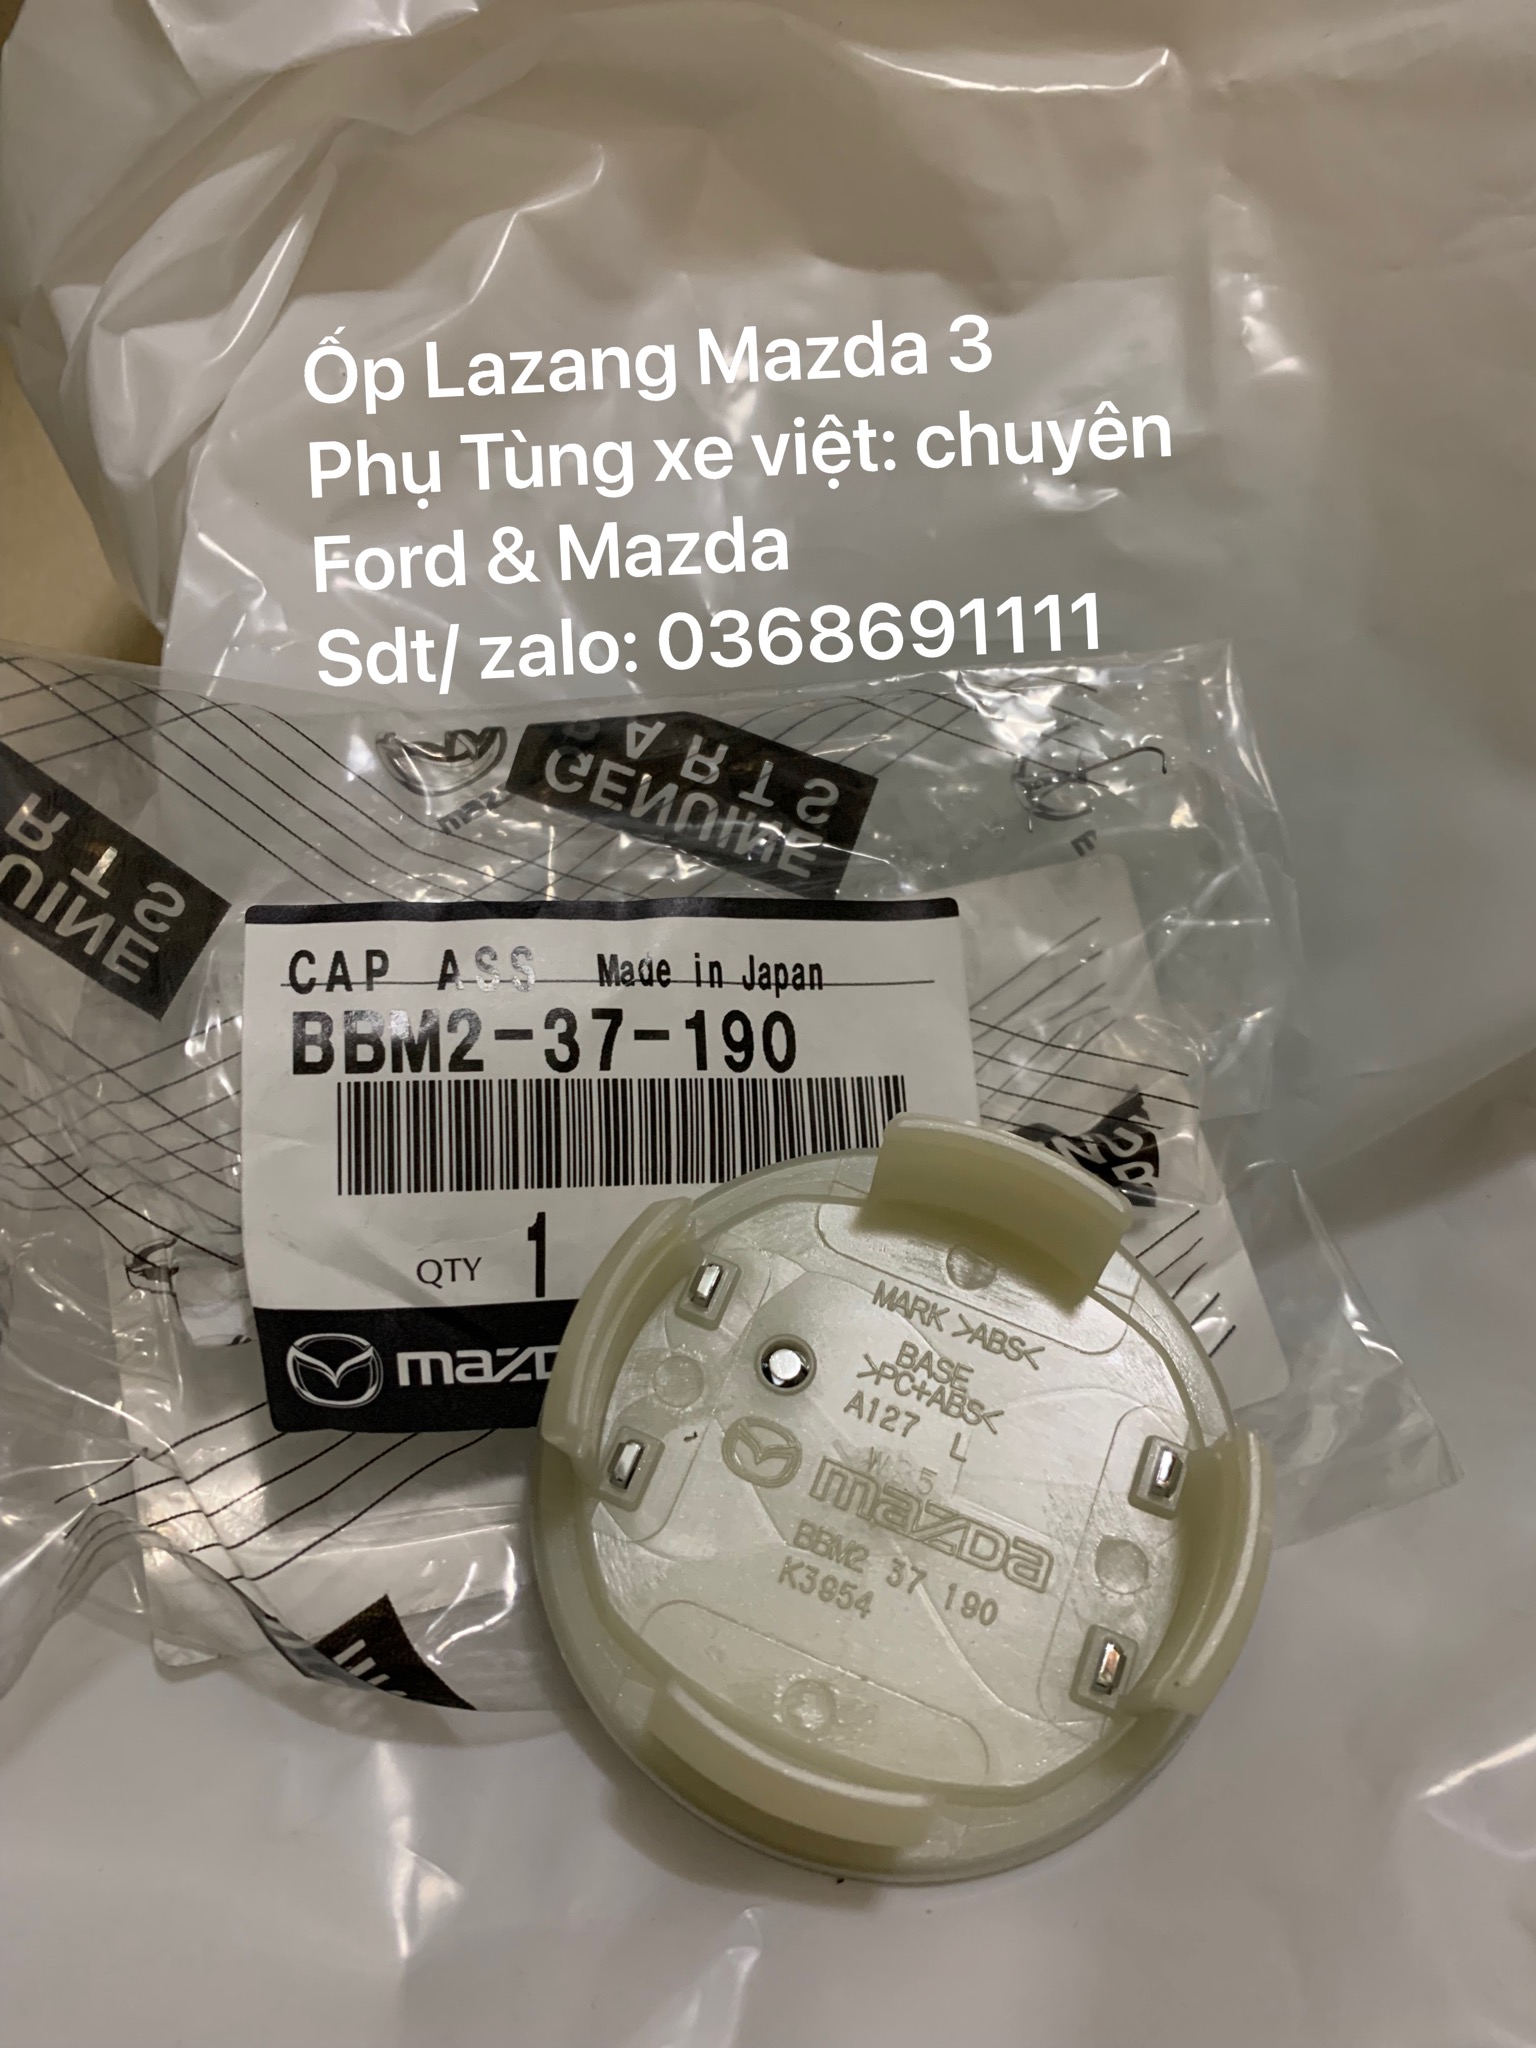 Ốp la zăng Mazda 3 , chụp lazang Mazda 3 BBM237190 BBM2-37-1905